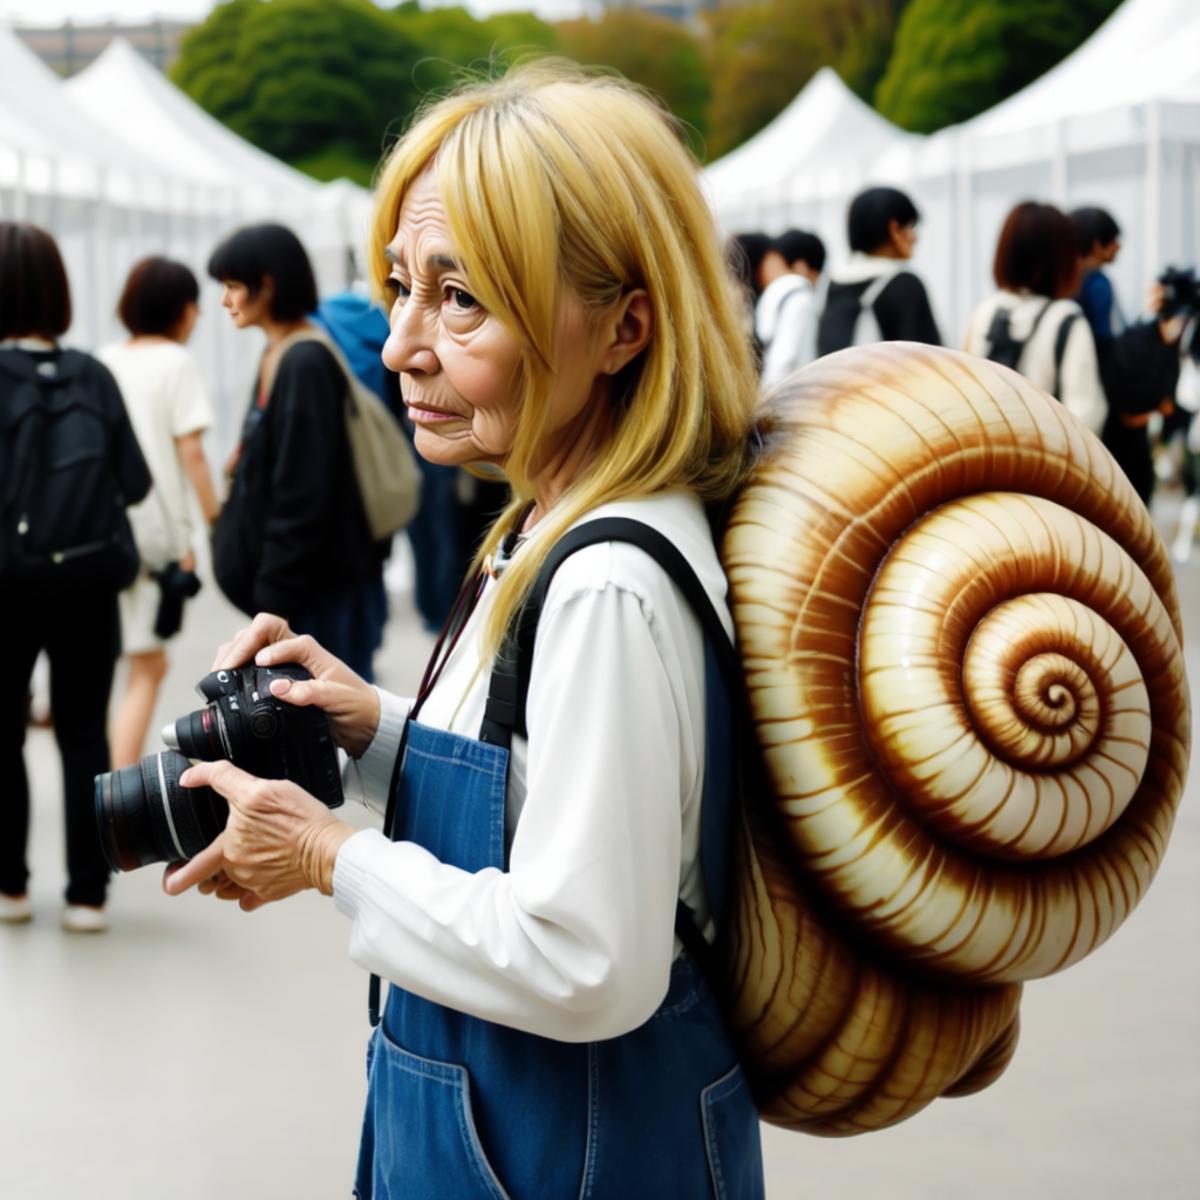 snail tourist image by Liquidn2